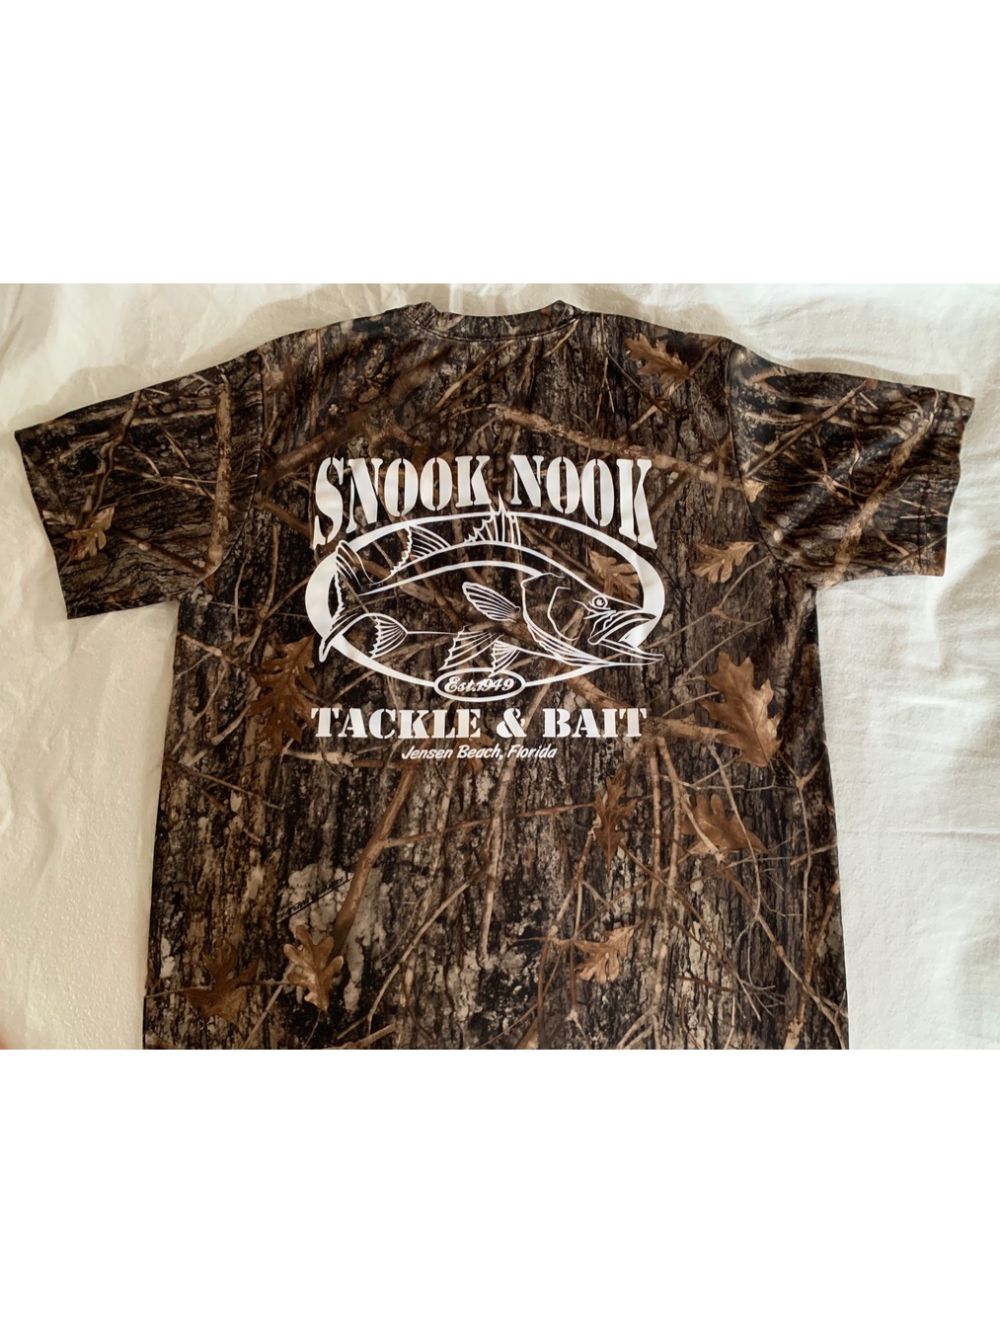 Snook Nook Camo Performance Shirt - Snook Nook Bait & Tackle